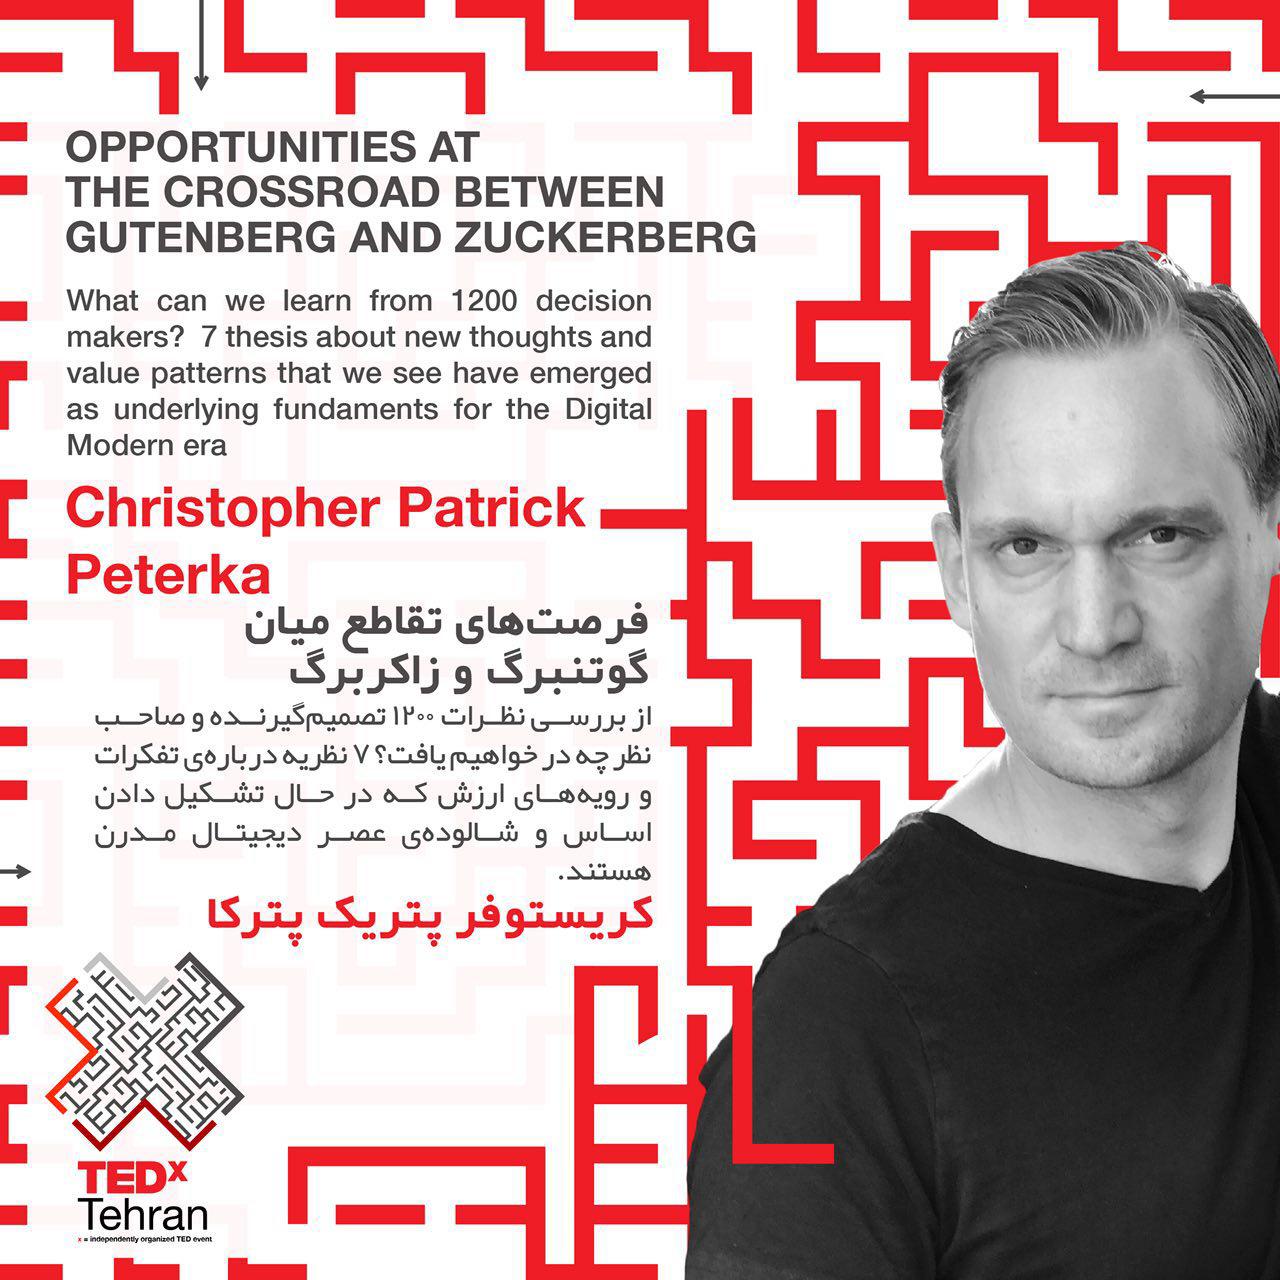 Christopher Patrick Peterka